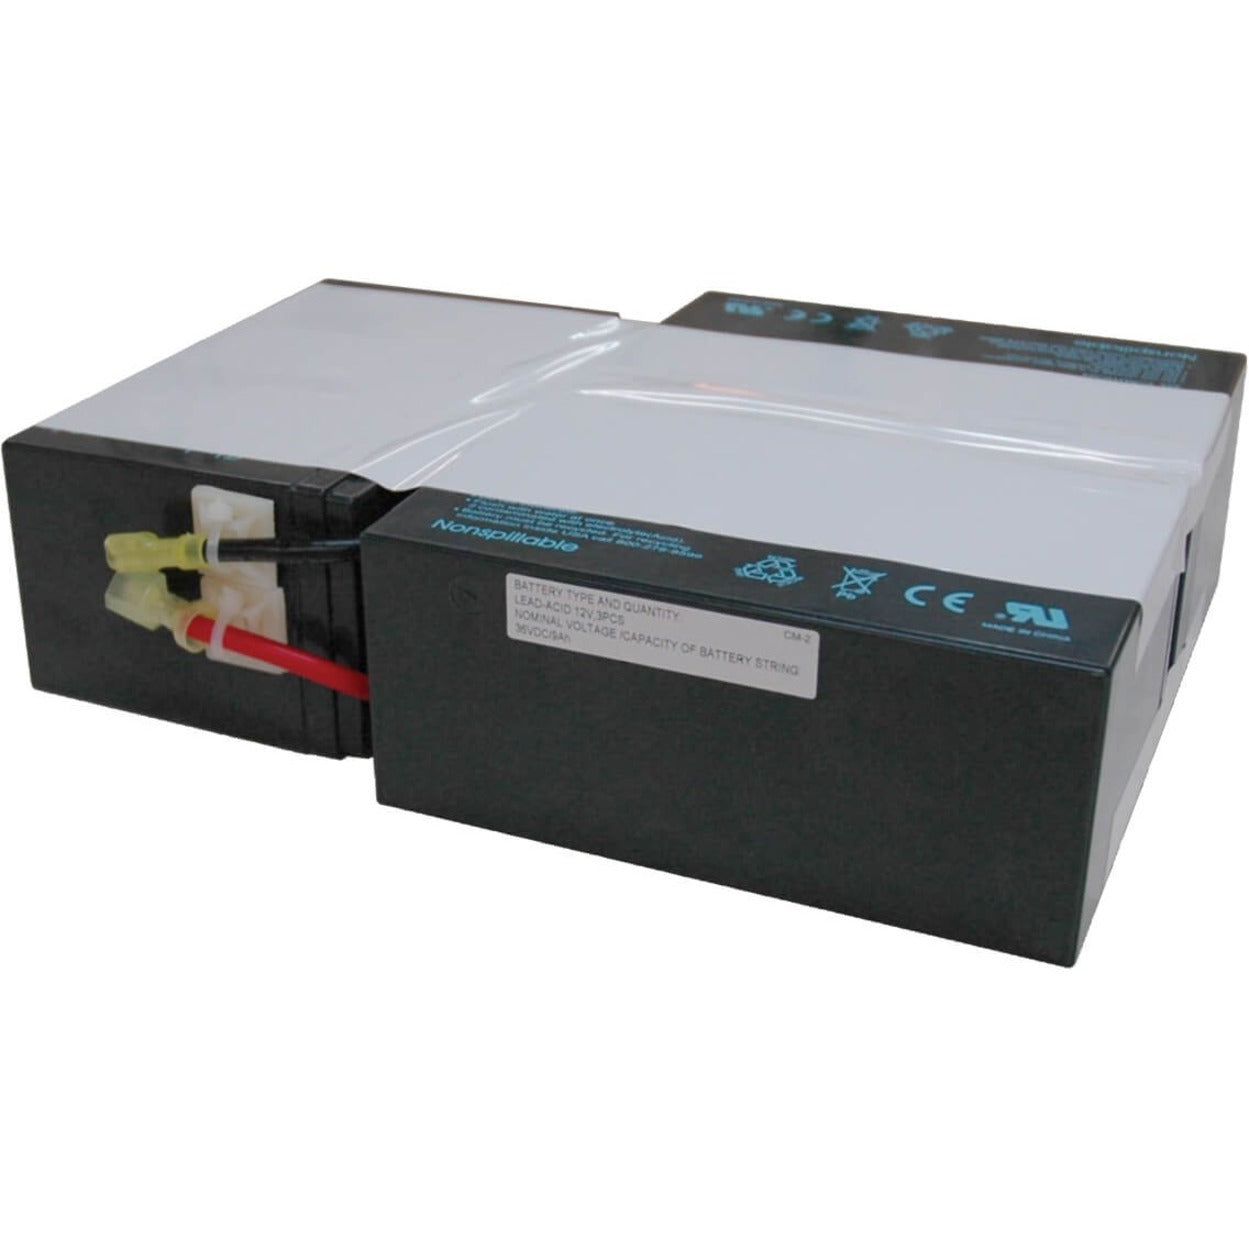 Tripp Lite RBC93-2U 2U UPS Replacement Battery Cartridge for select Tripp Lite SmartPro UPS, Restores UPS runtime performance